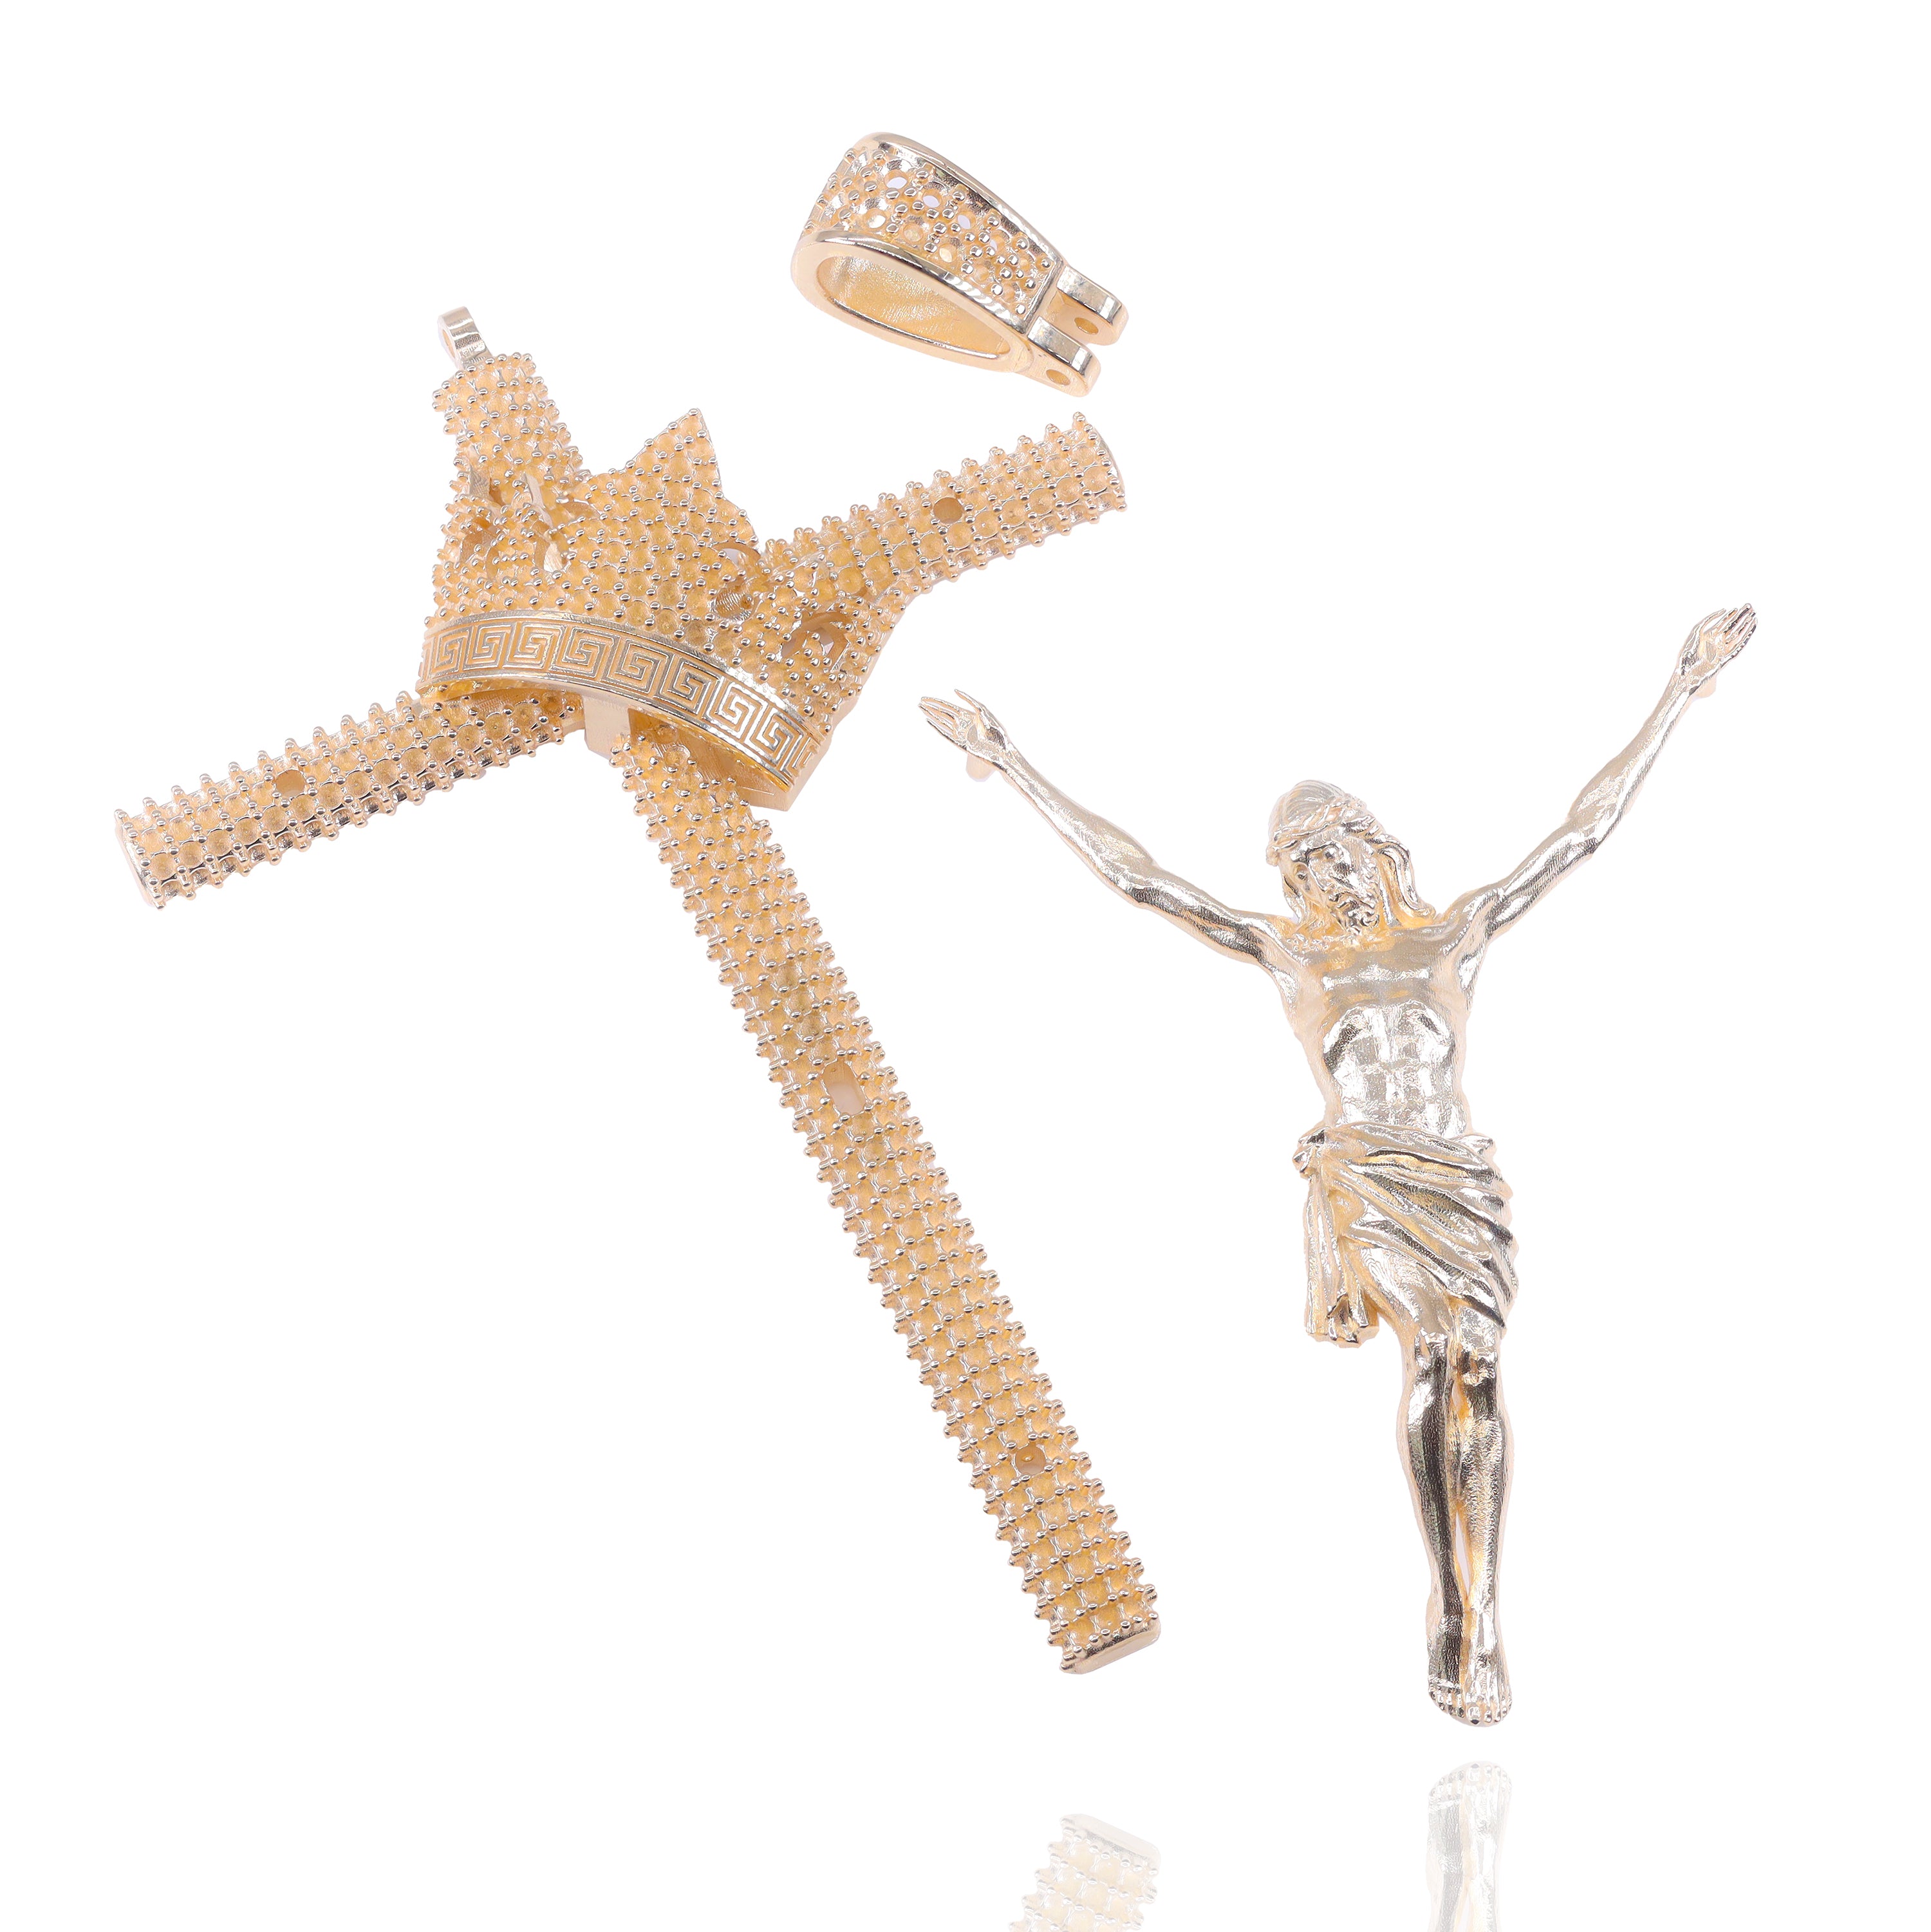 Custom Design Deposit - Solid Gold Jesus on the Cross Diamond Pendant